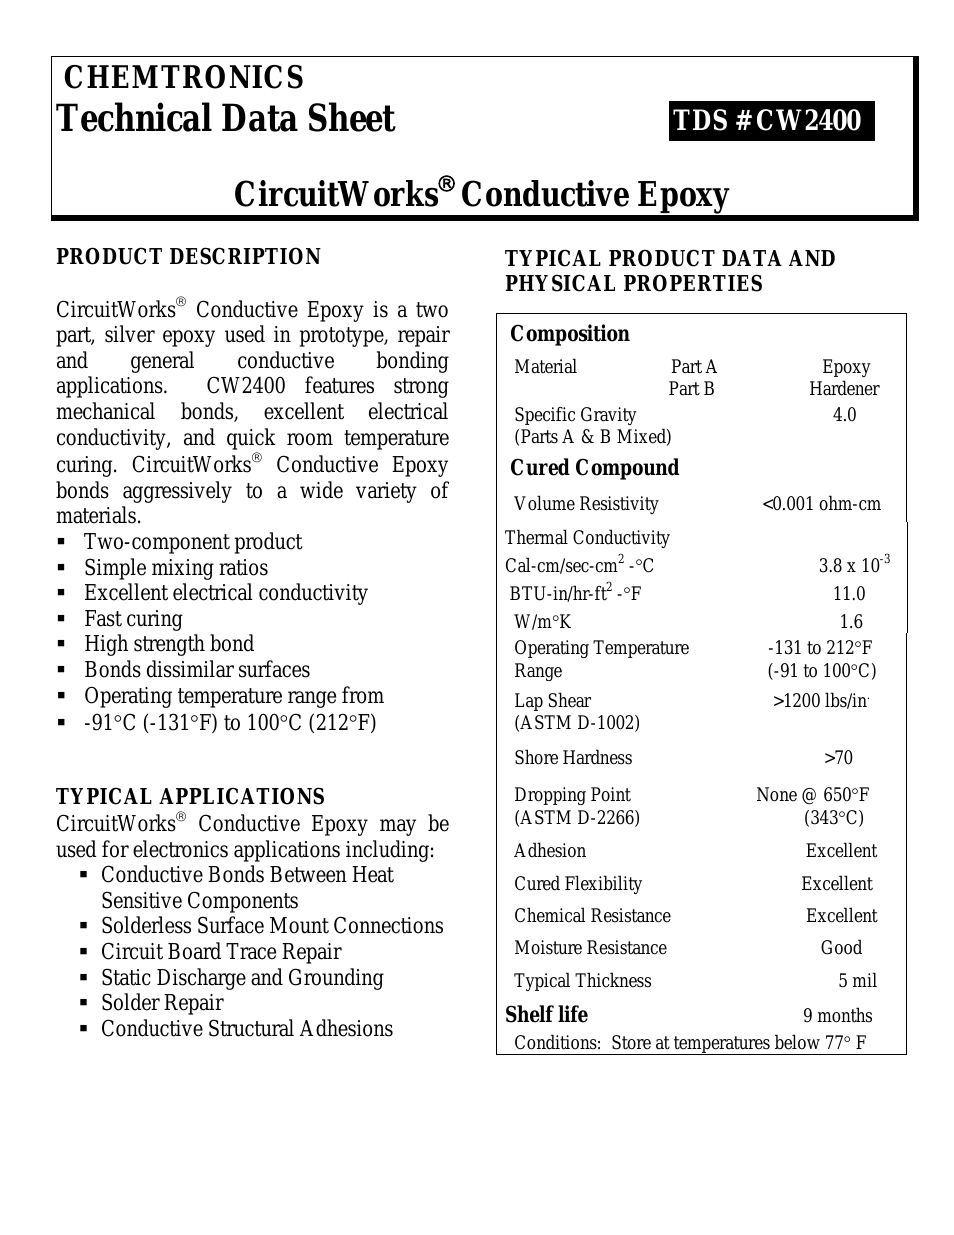 CircuitWorks 5 Minute Conductive Epoxy CW2400J